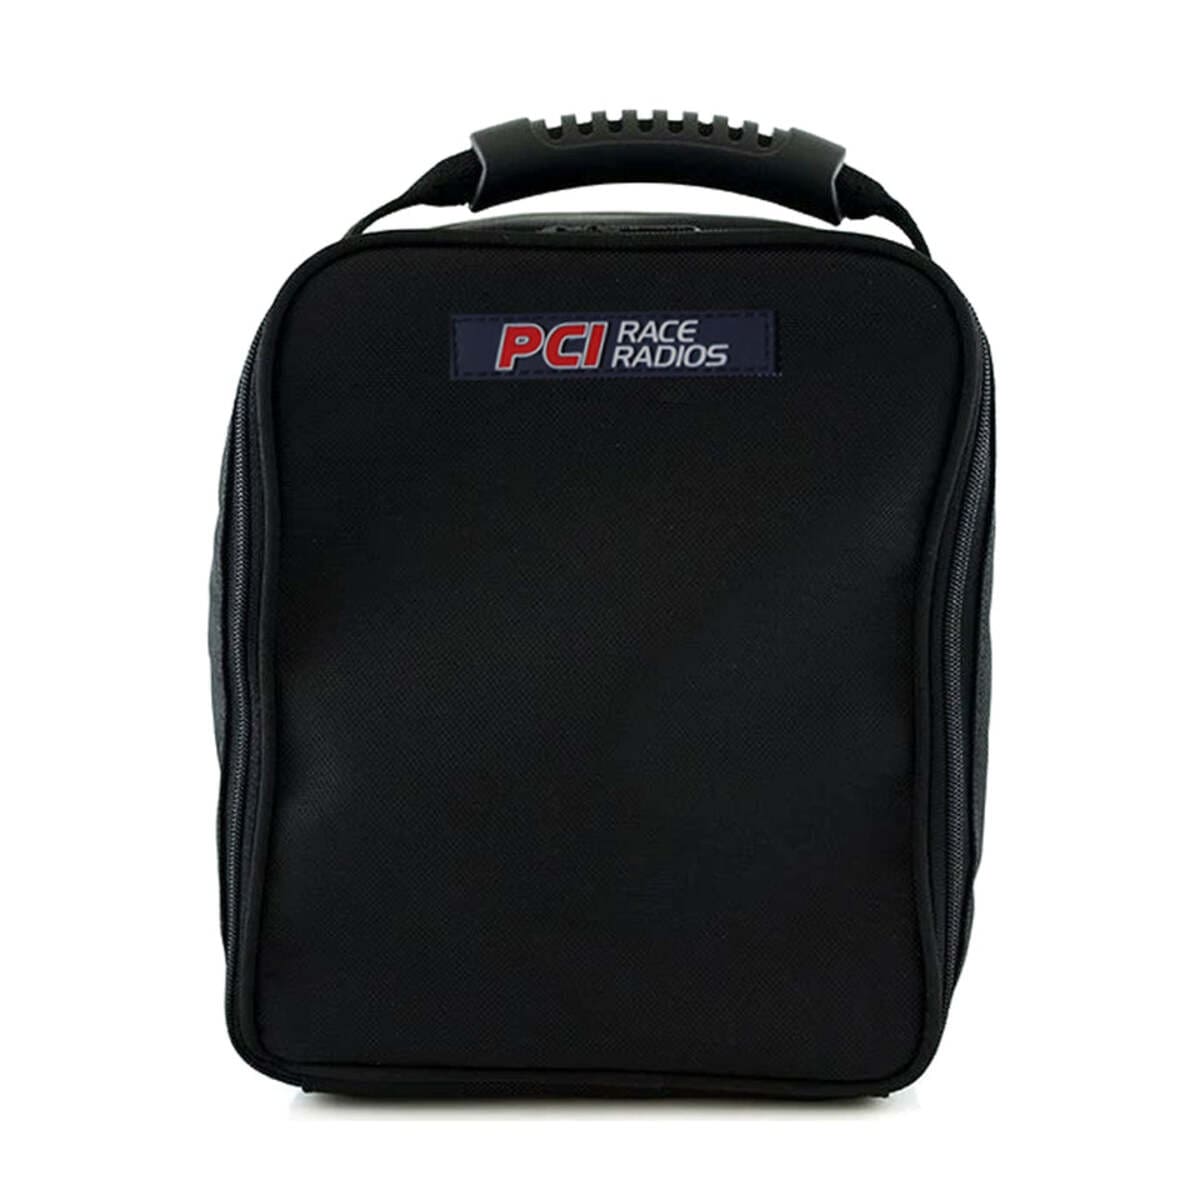 PCI Race Radios Headset Bag